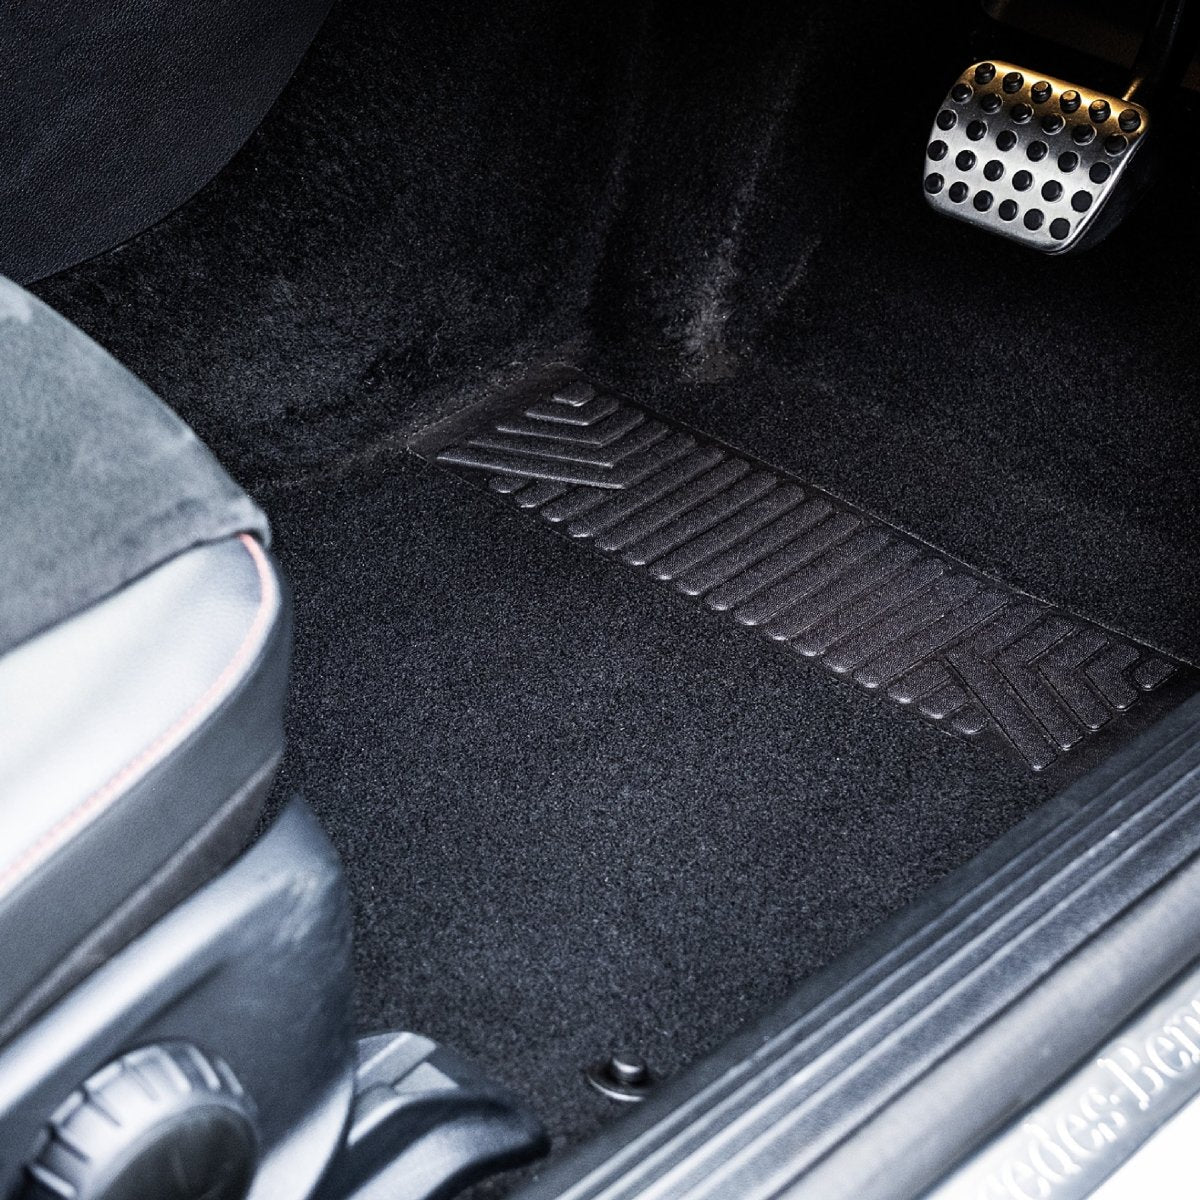 Mercedes Vito LWB Rear 2015 captains seating - Tailored Car Carpet Floor Mats - Green Flag Shop